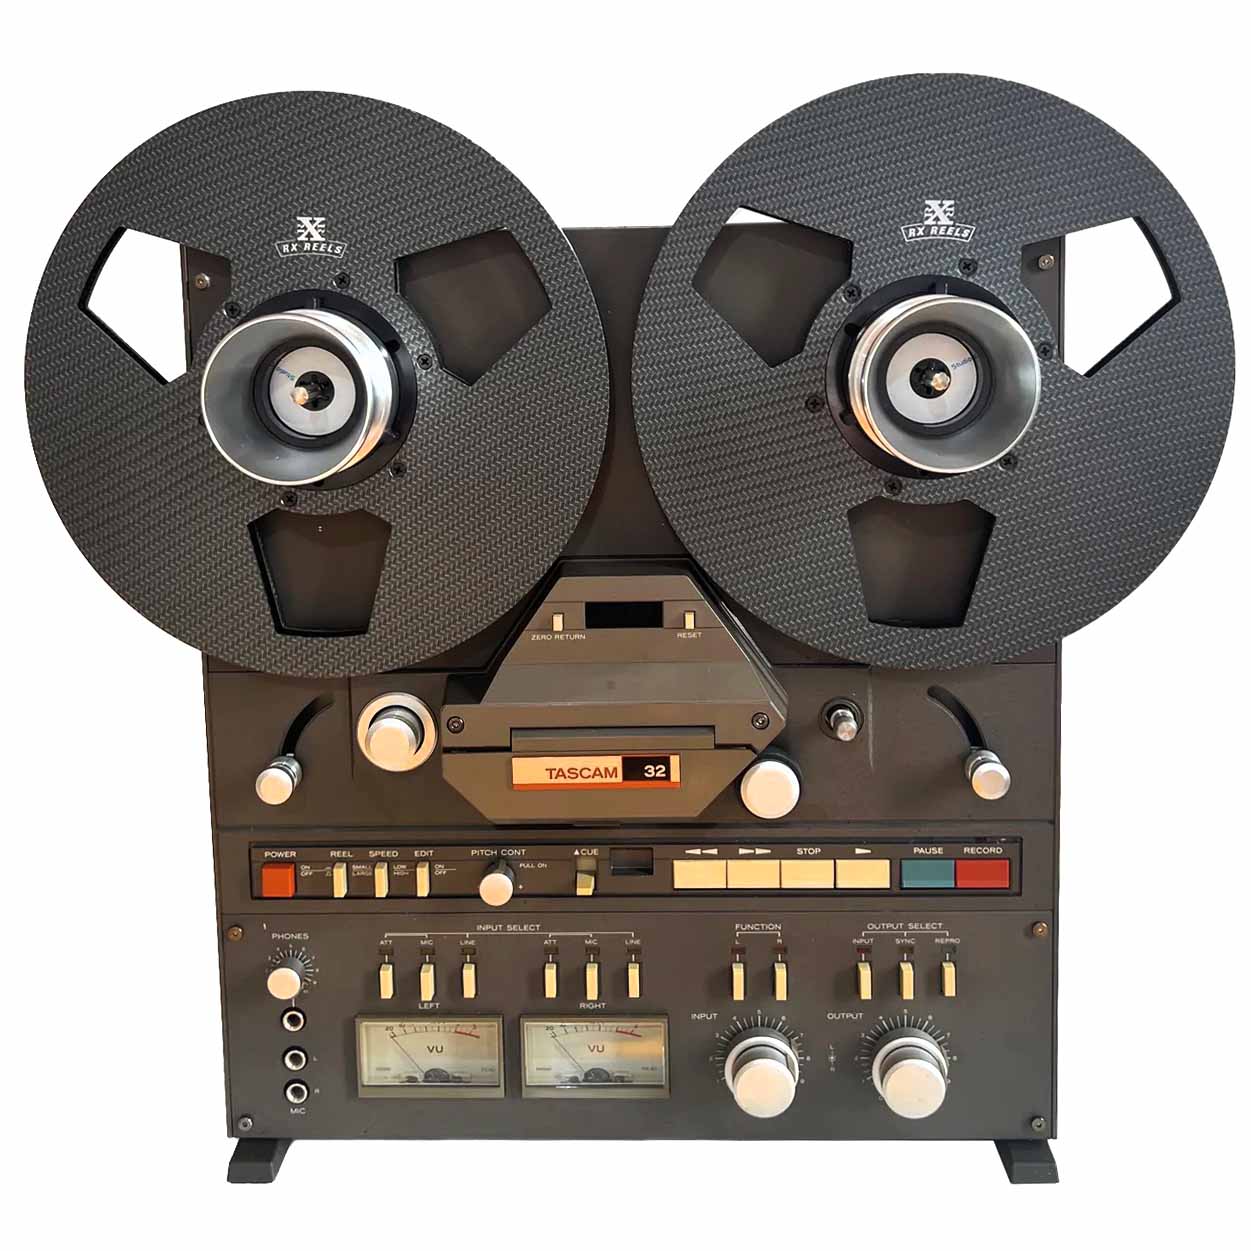 Old Vintage Player Reels Antique Reel Reel Tape Recorder Spools